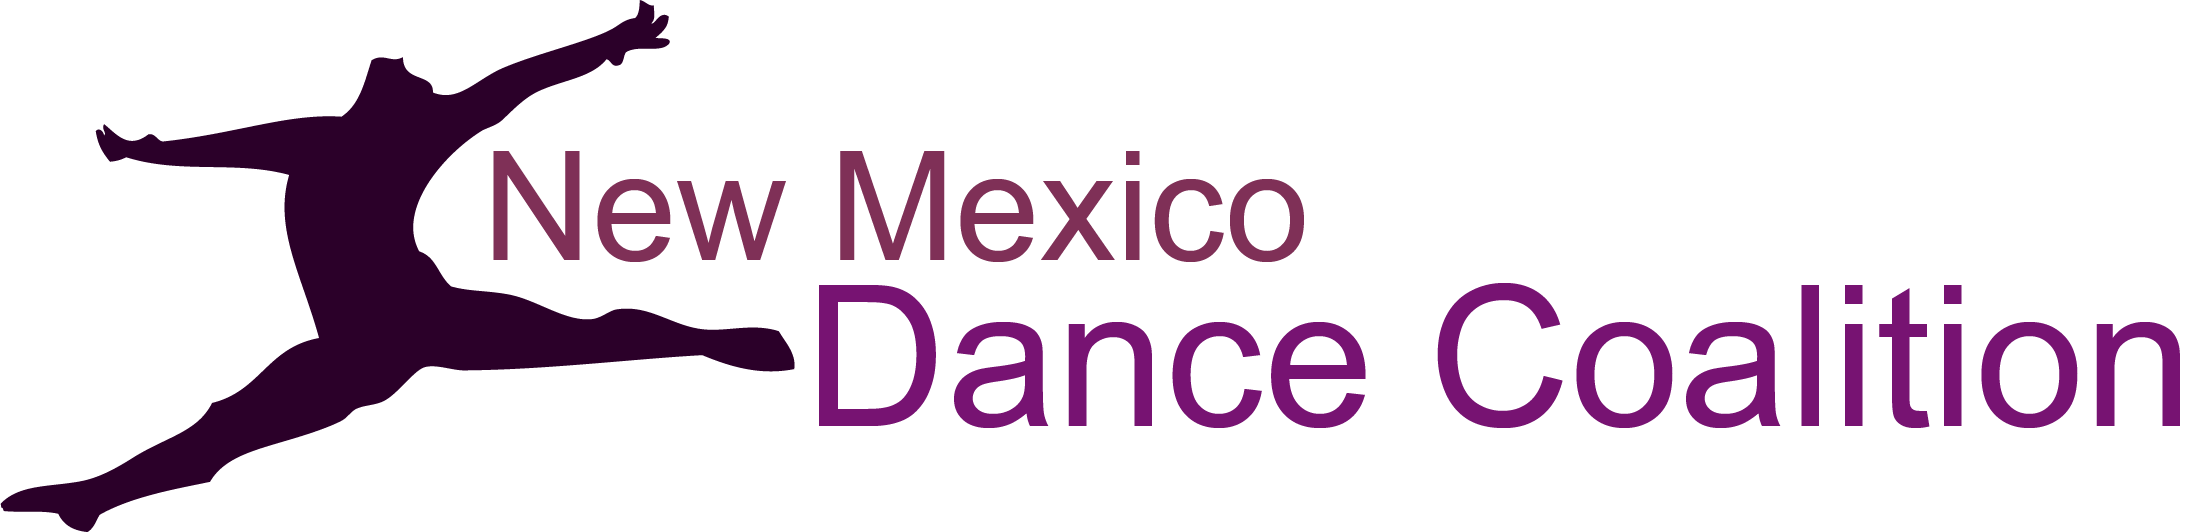 New Mexico Dance Coalition